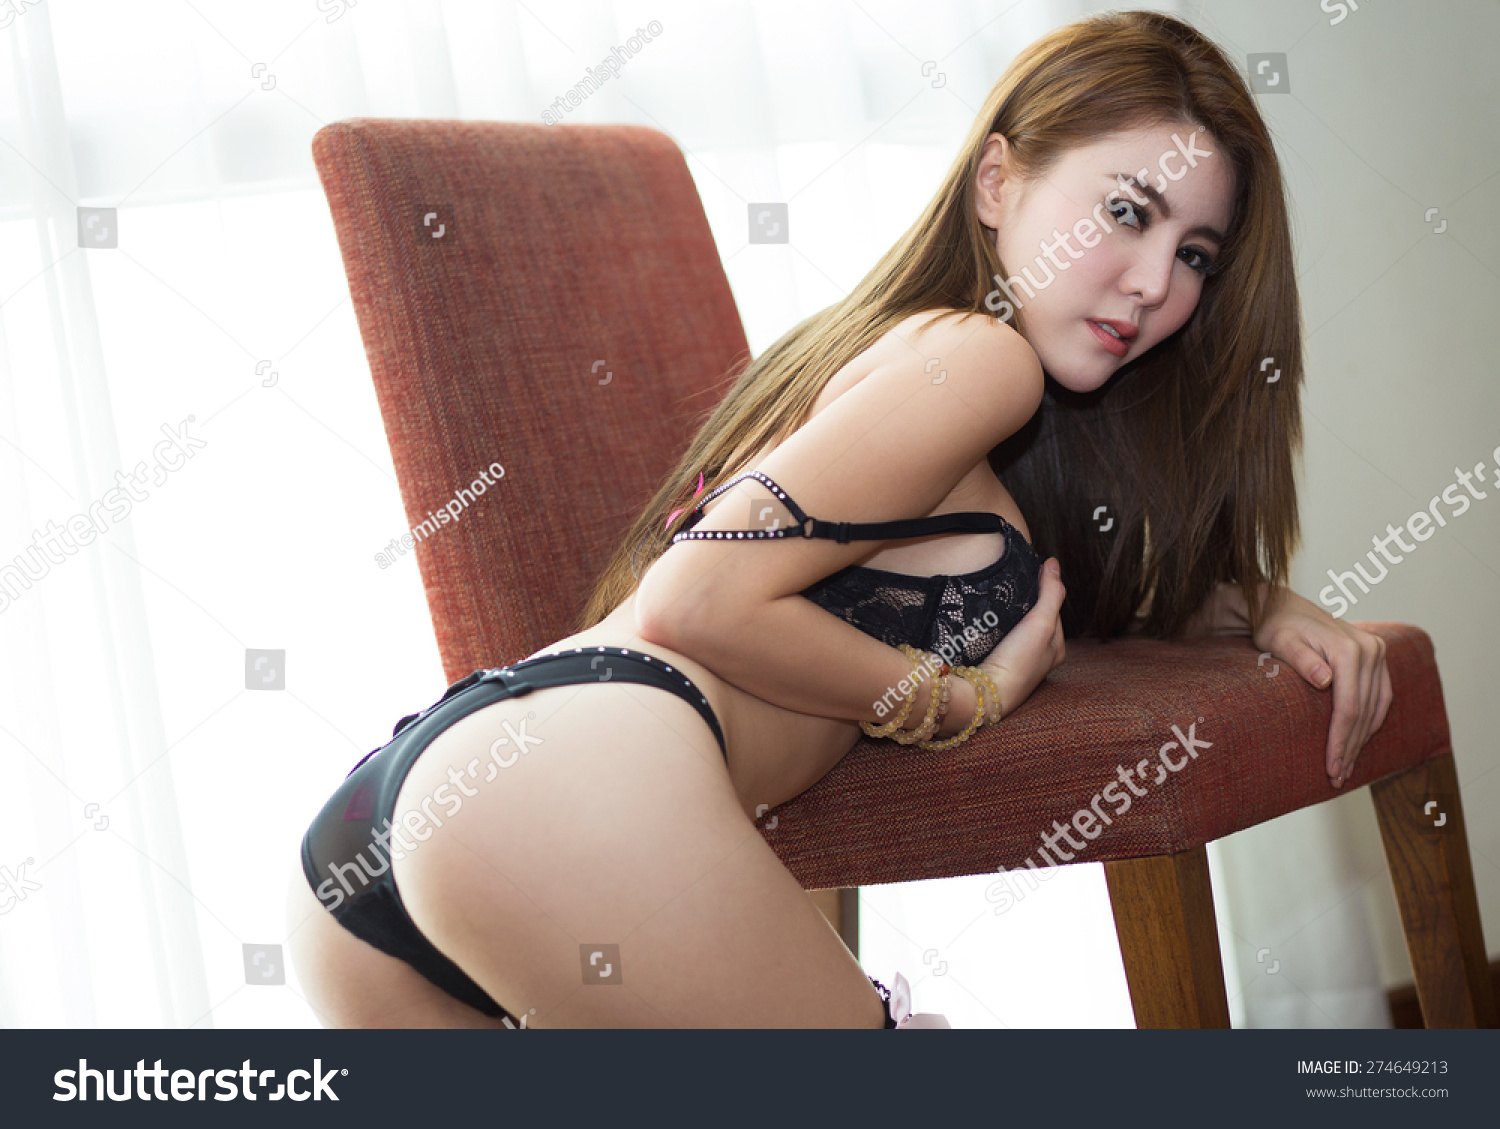 Woman hot asian Hot Asian